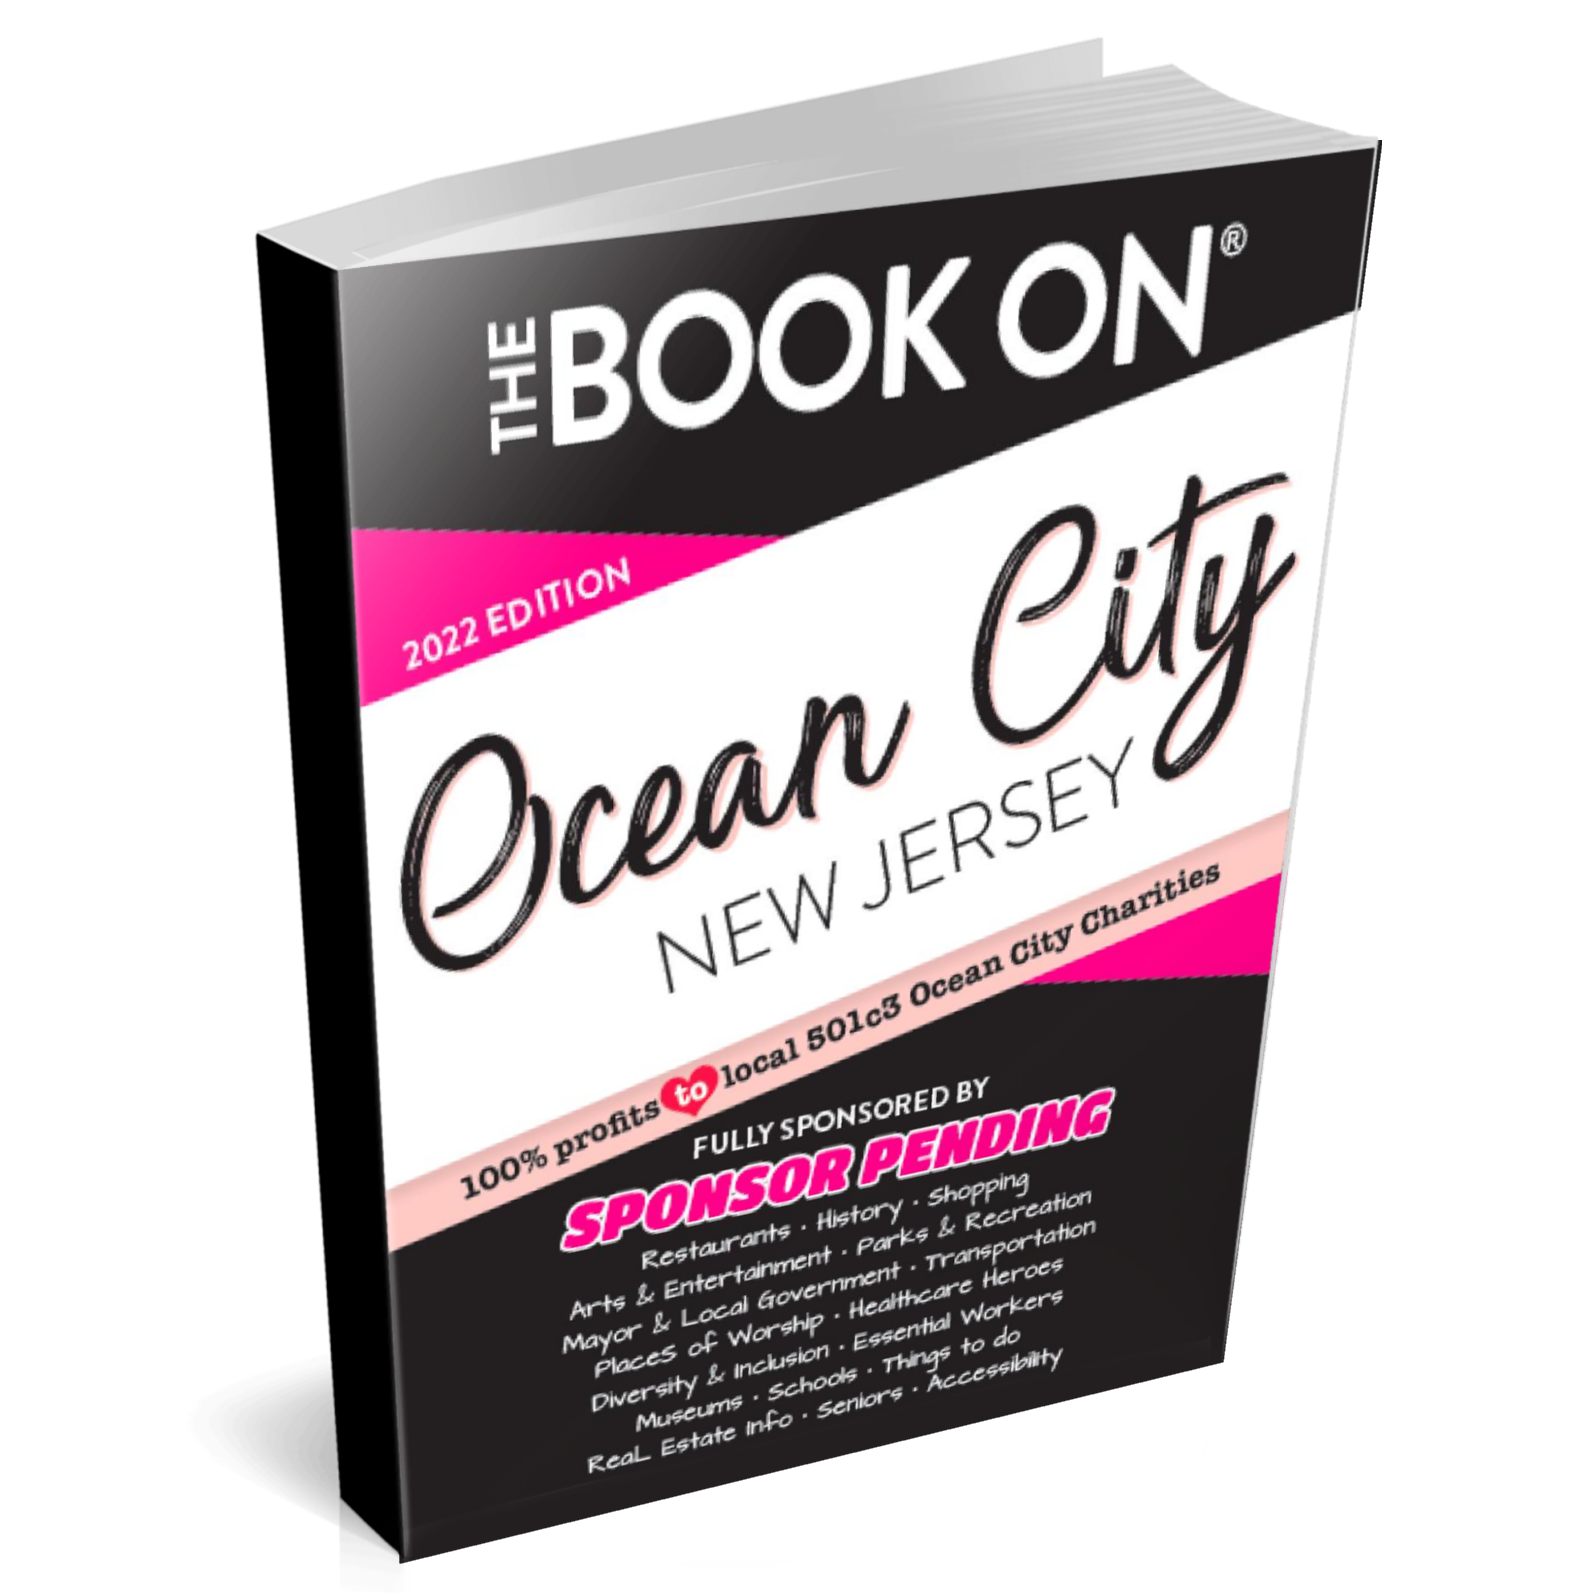 Chooserethink:Ocean City NEW JERSEY